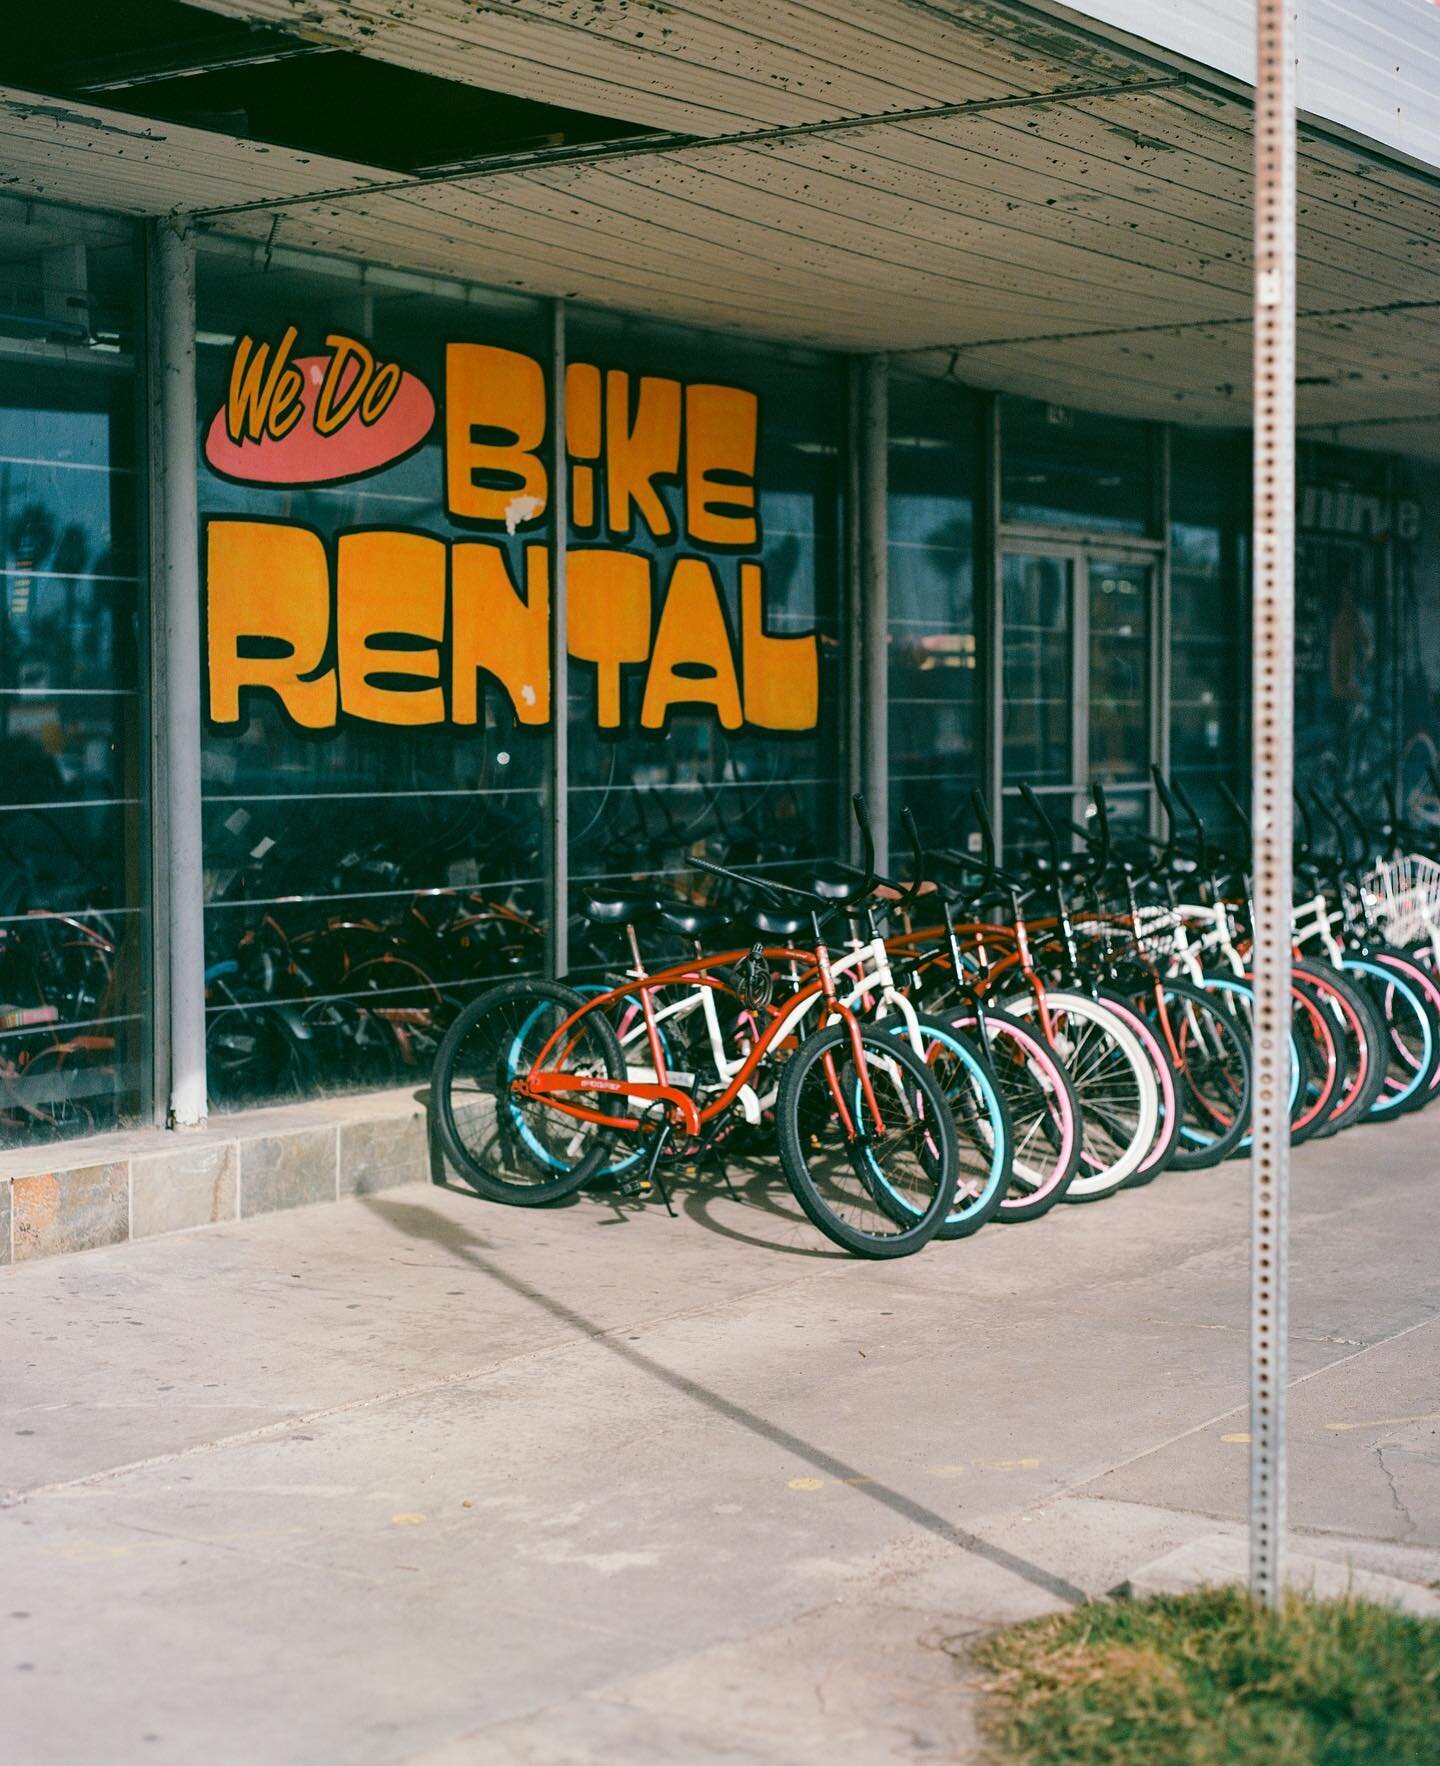 We Do Bike Rental in San Diego, California

Shot on the Pentax 6x7